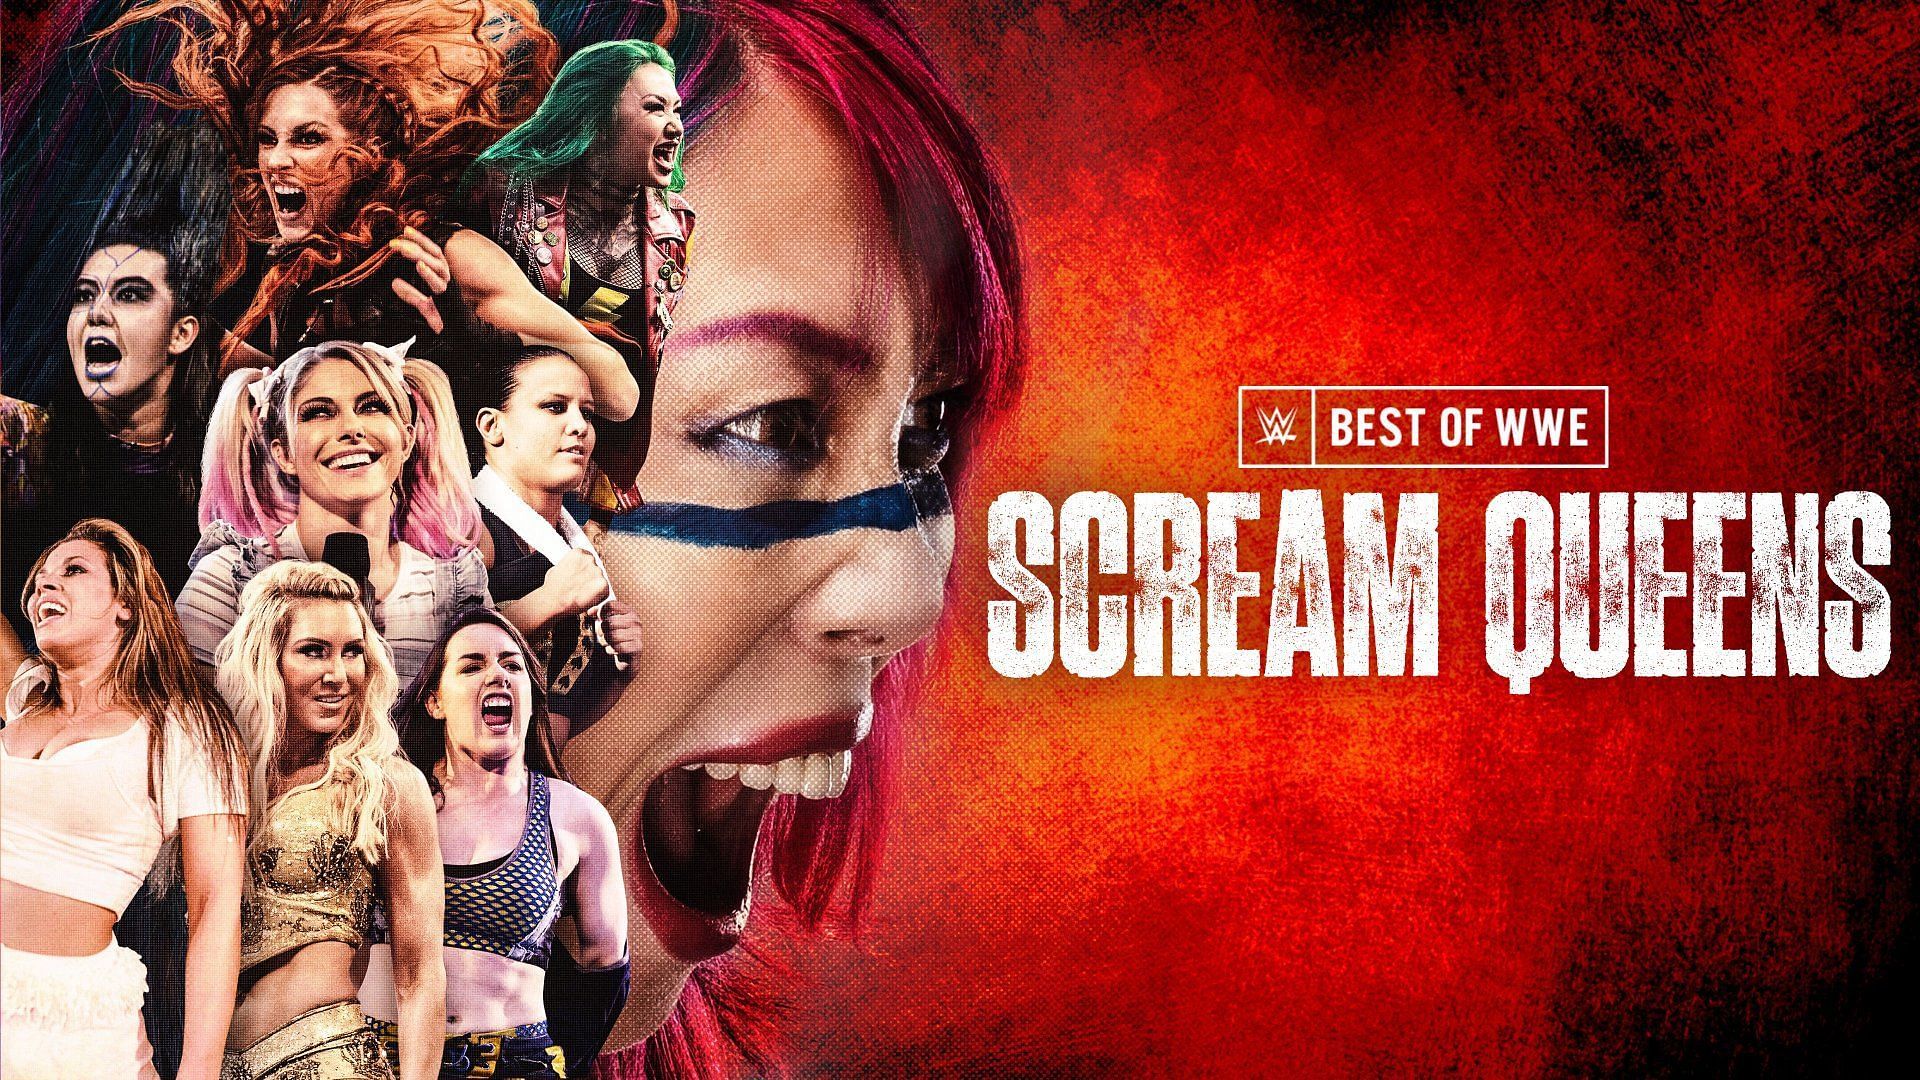 The Best Of WWE: Scream Queens graphic